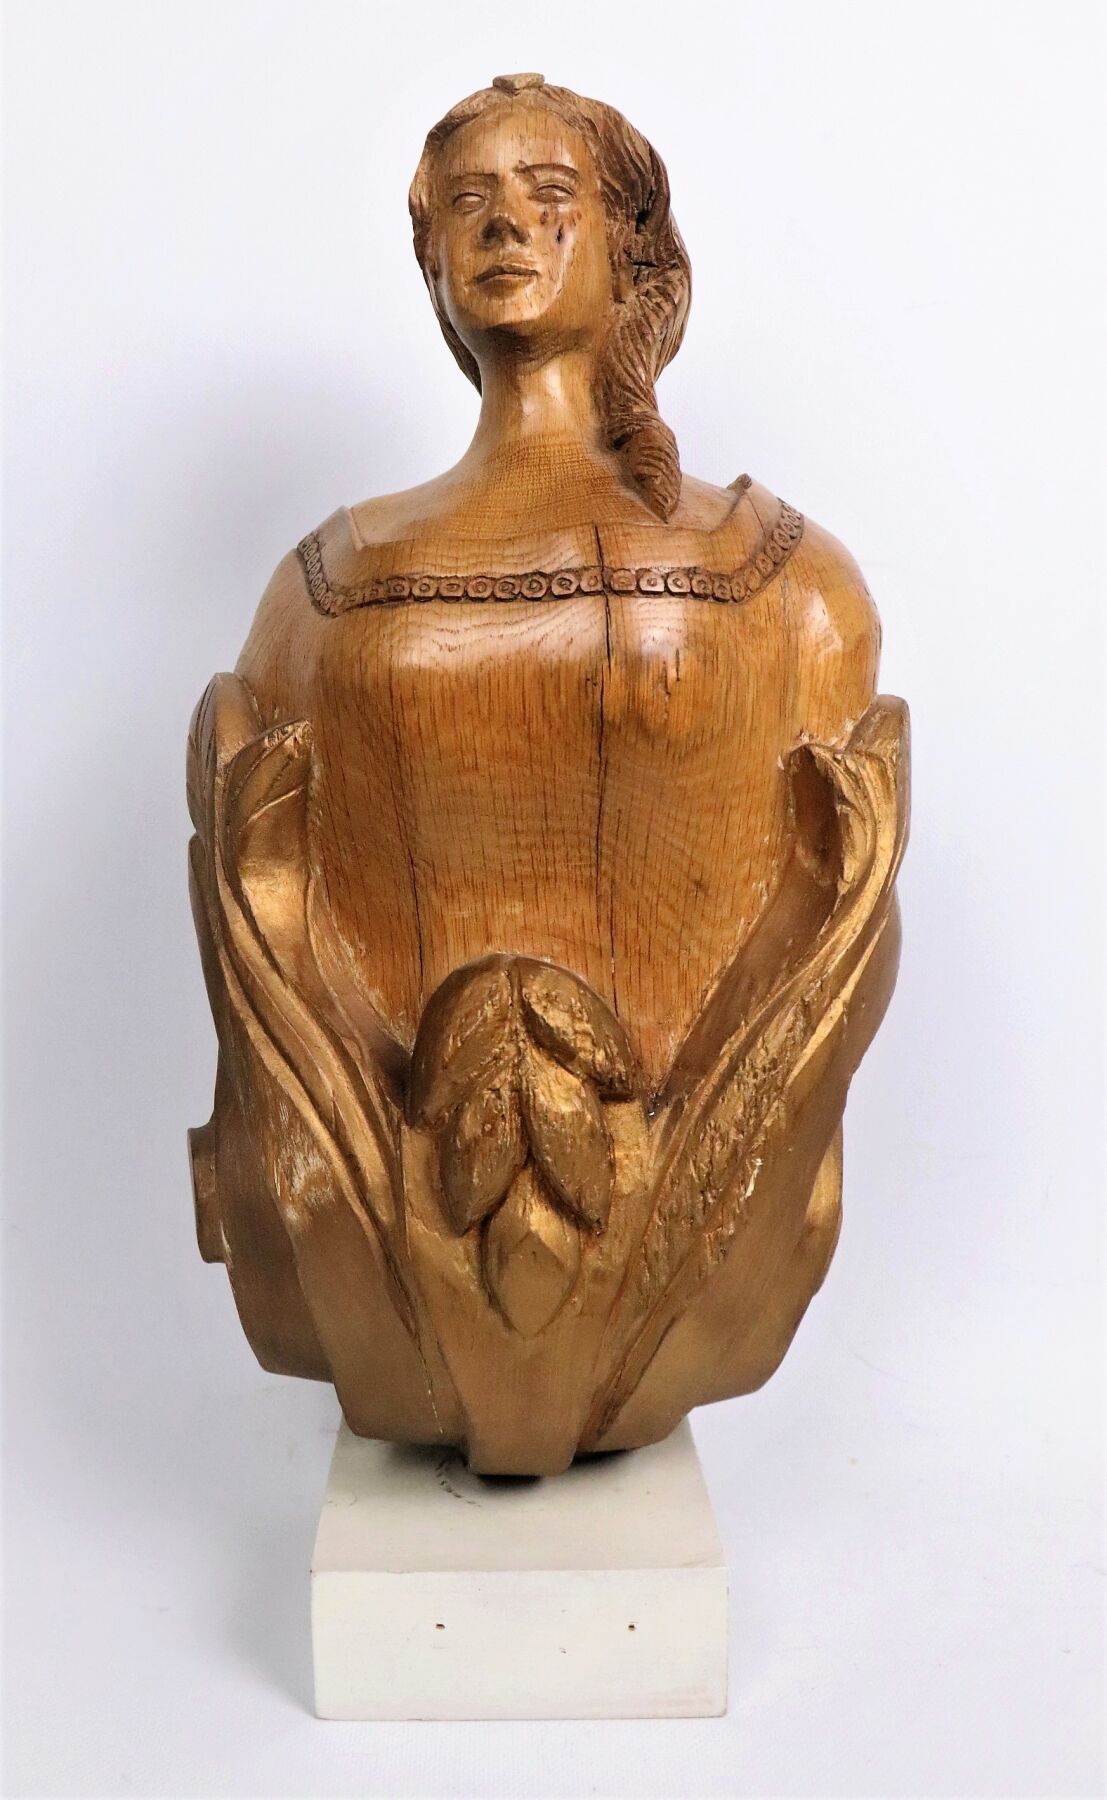 Null 雕刻和部分镀金的木制人物头像。
它矗立在一个涂色的木质底座上。
高46.2厘米